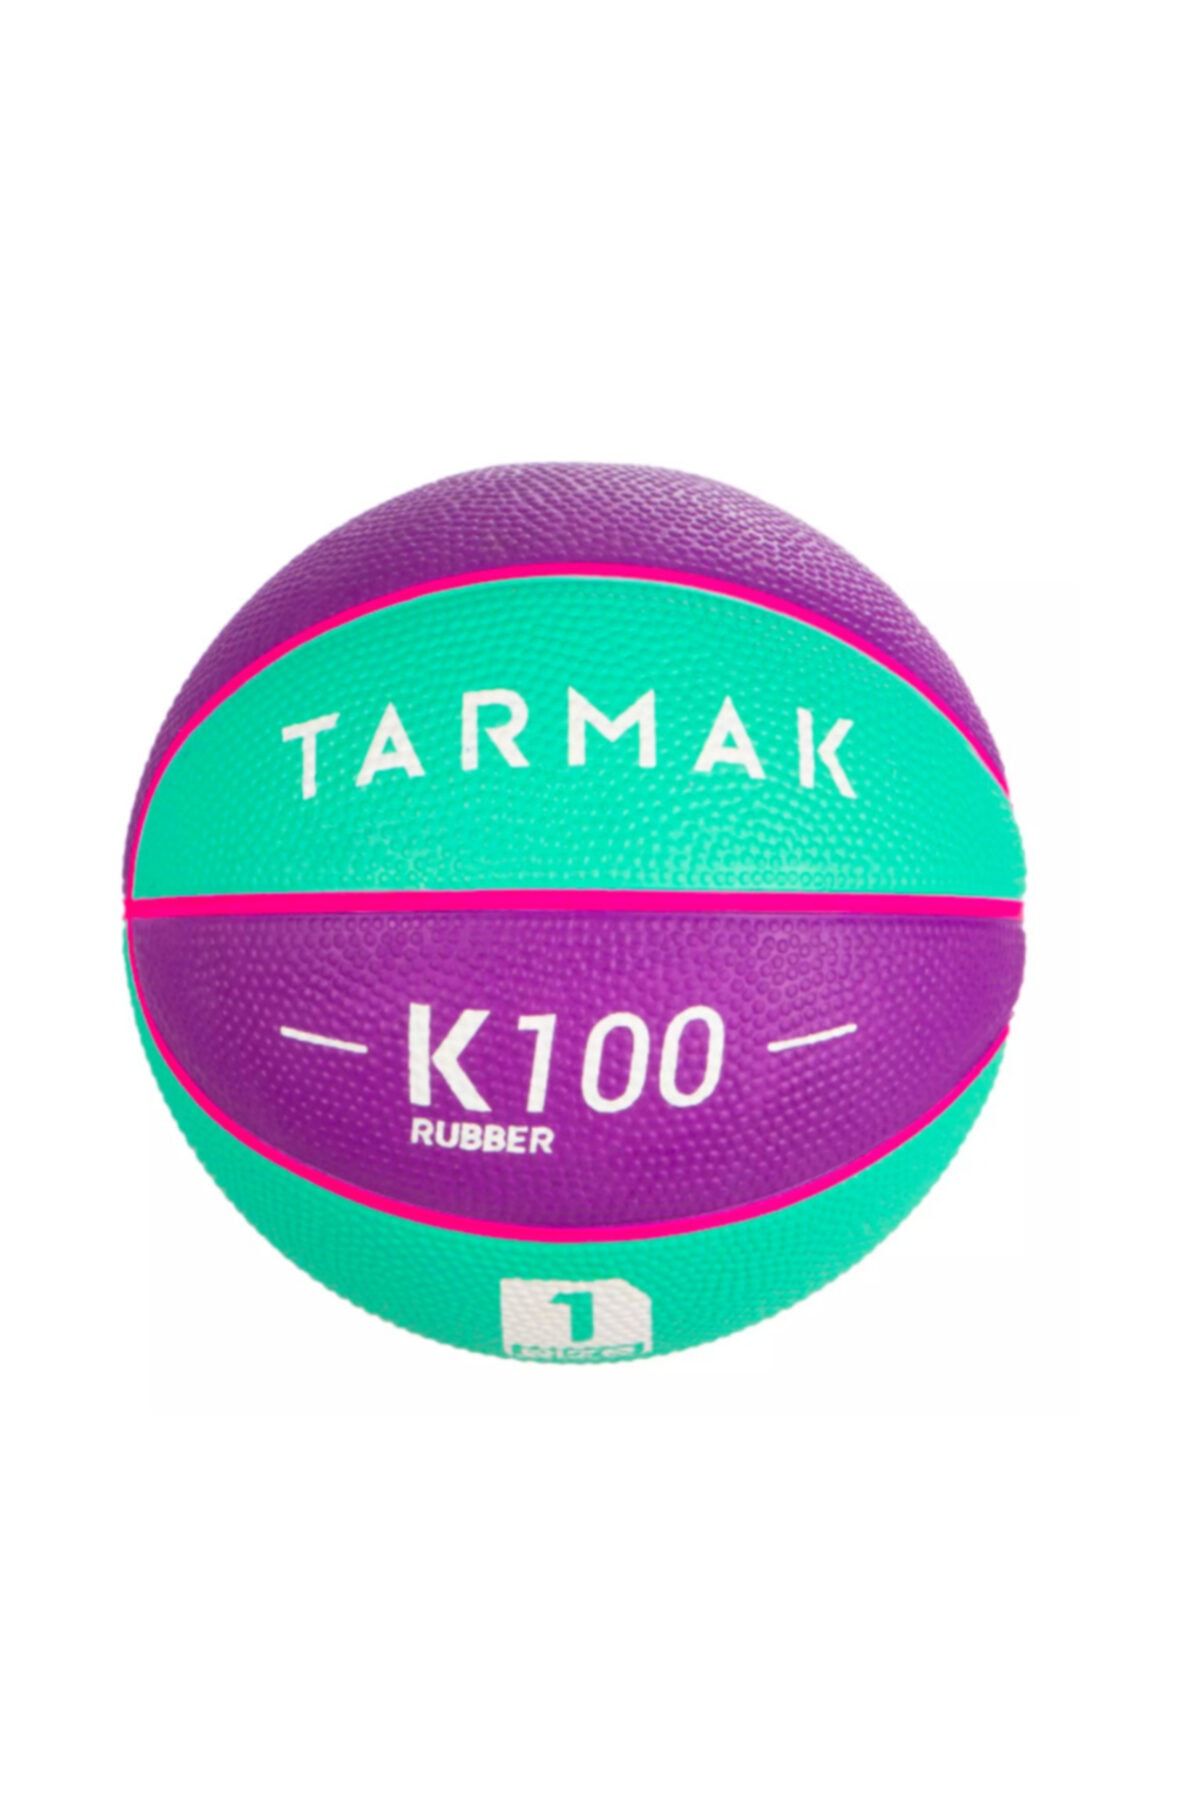 Decathlon - Mini Basketbol Topu 1 Numara Mor Turkuaz K100